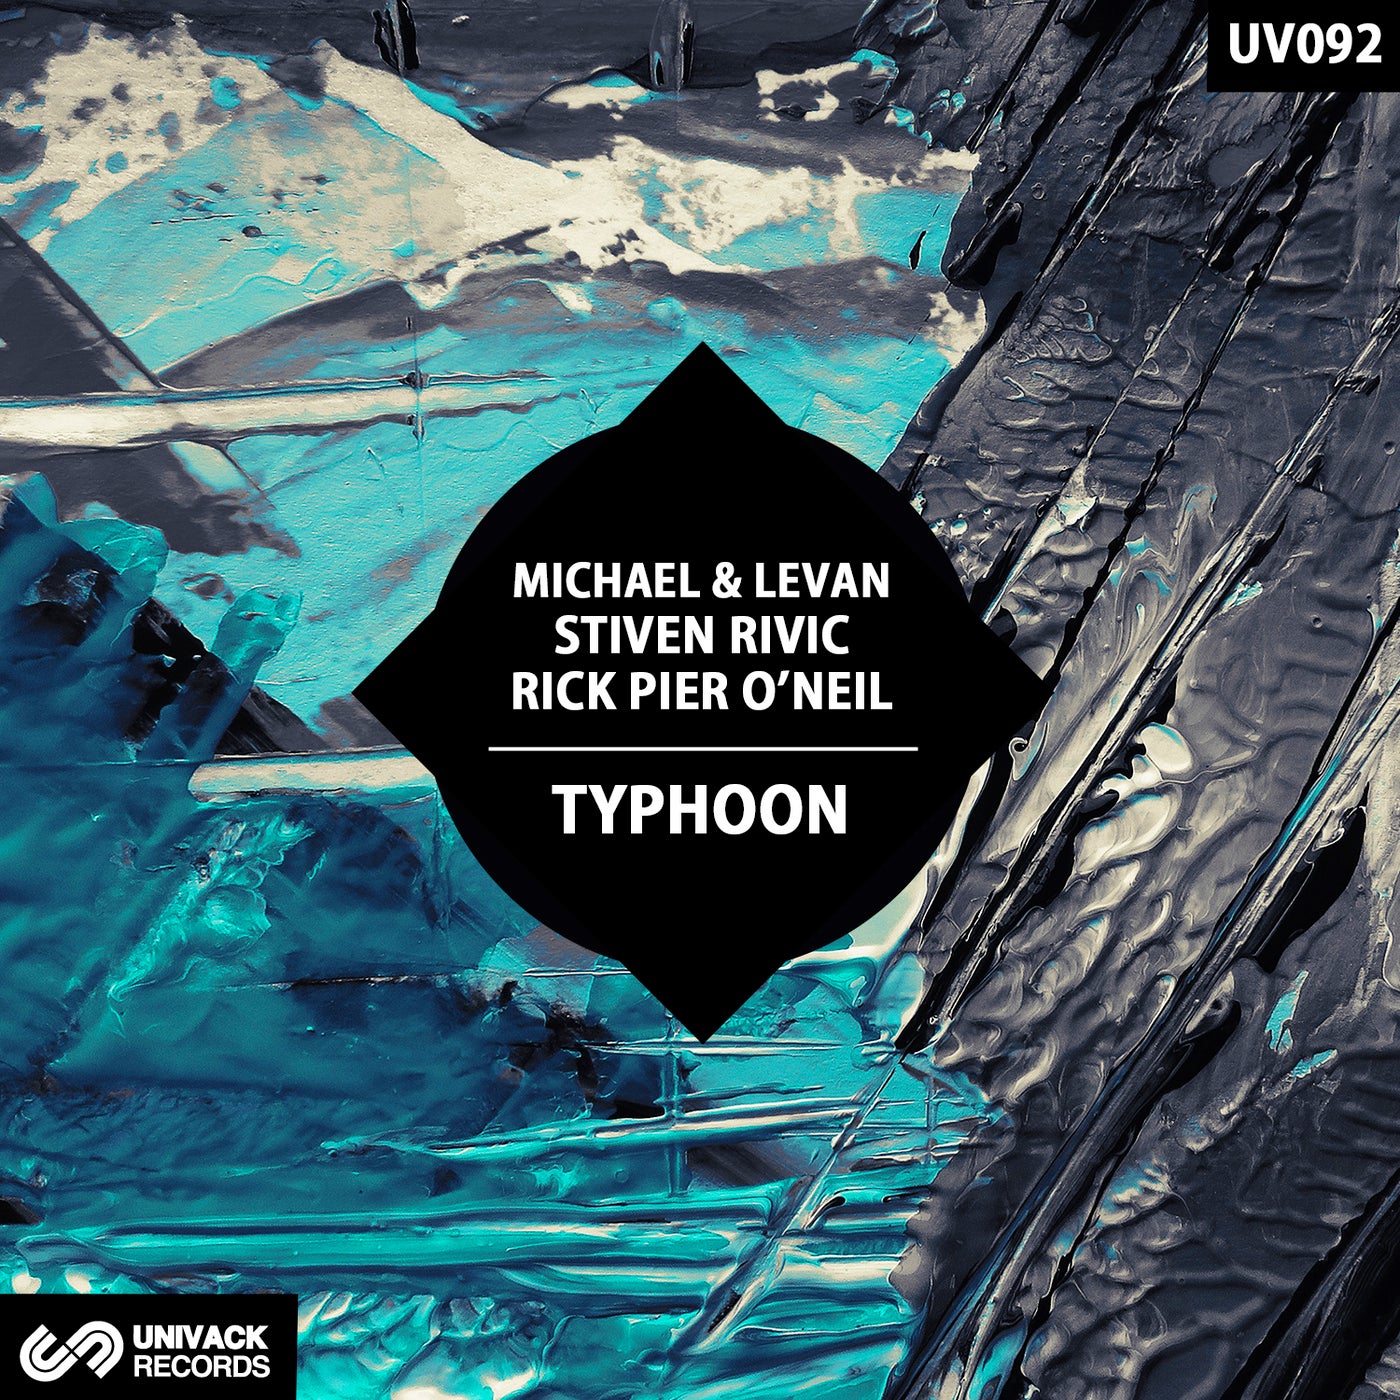 Michael & Levan, Stiven Rivic, Rick Pier O’Neil – Monsoon [UV092]